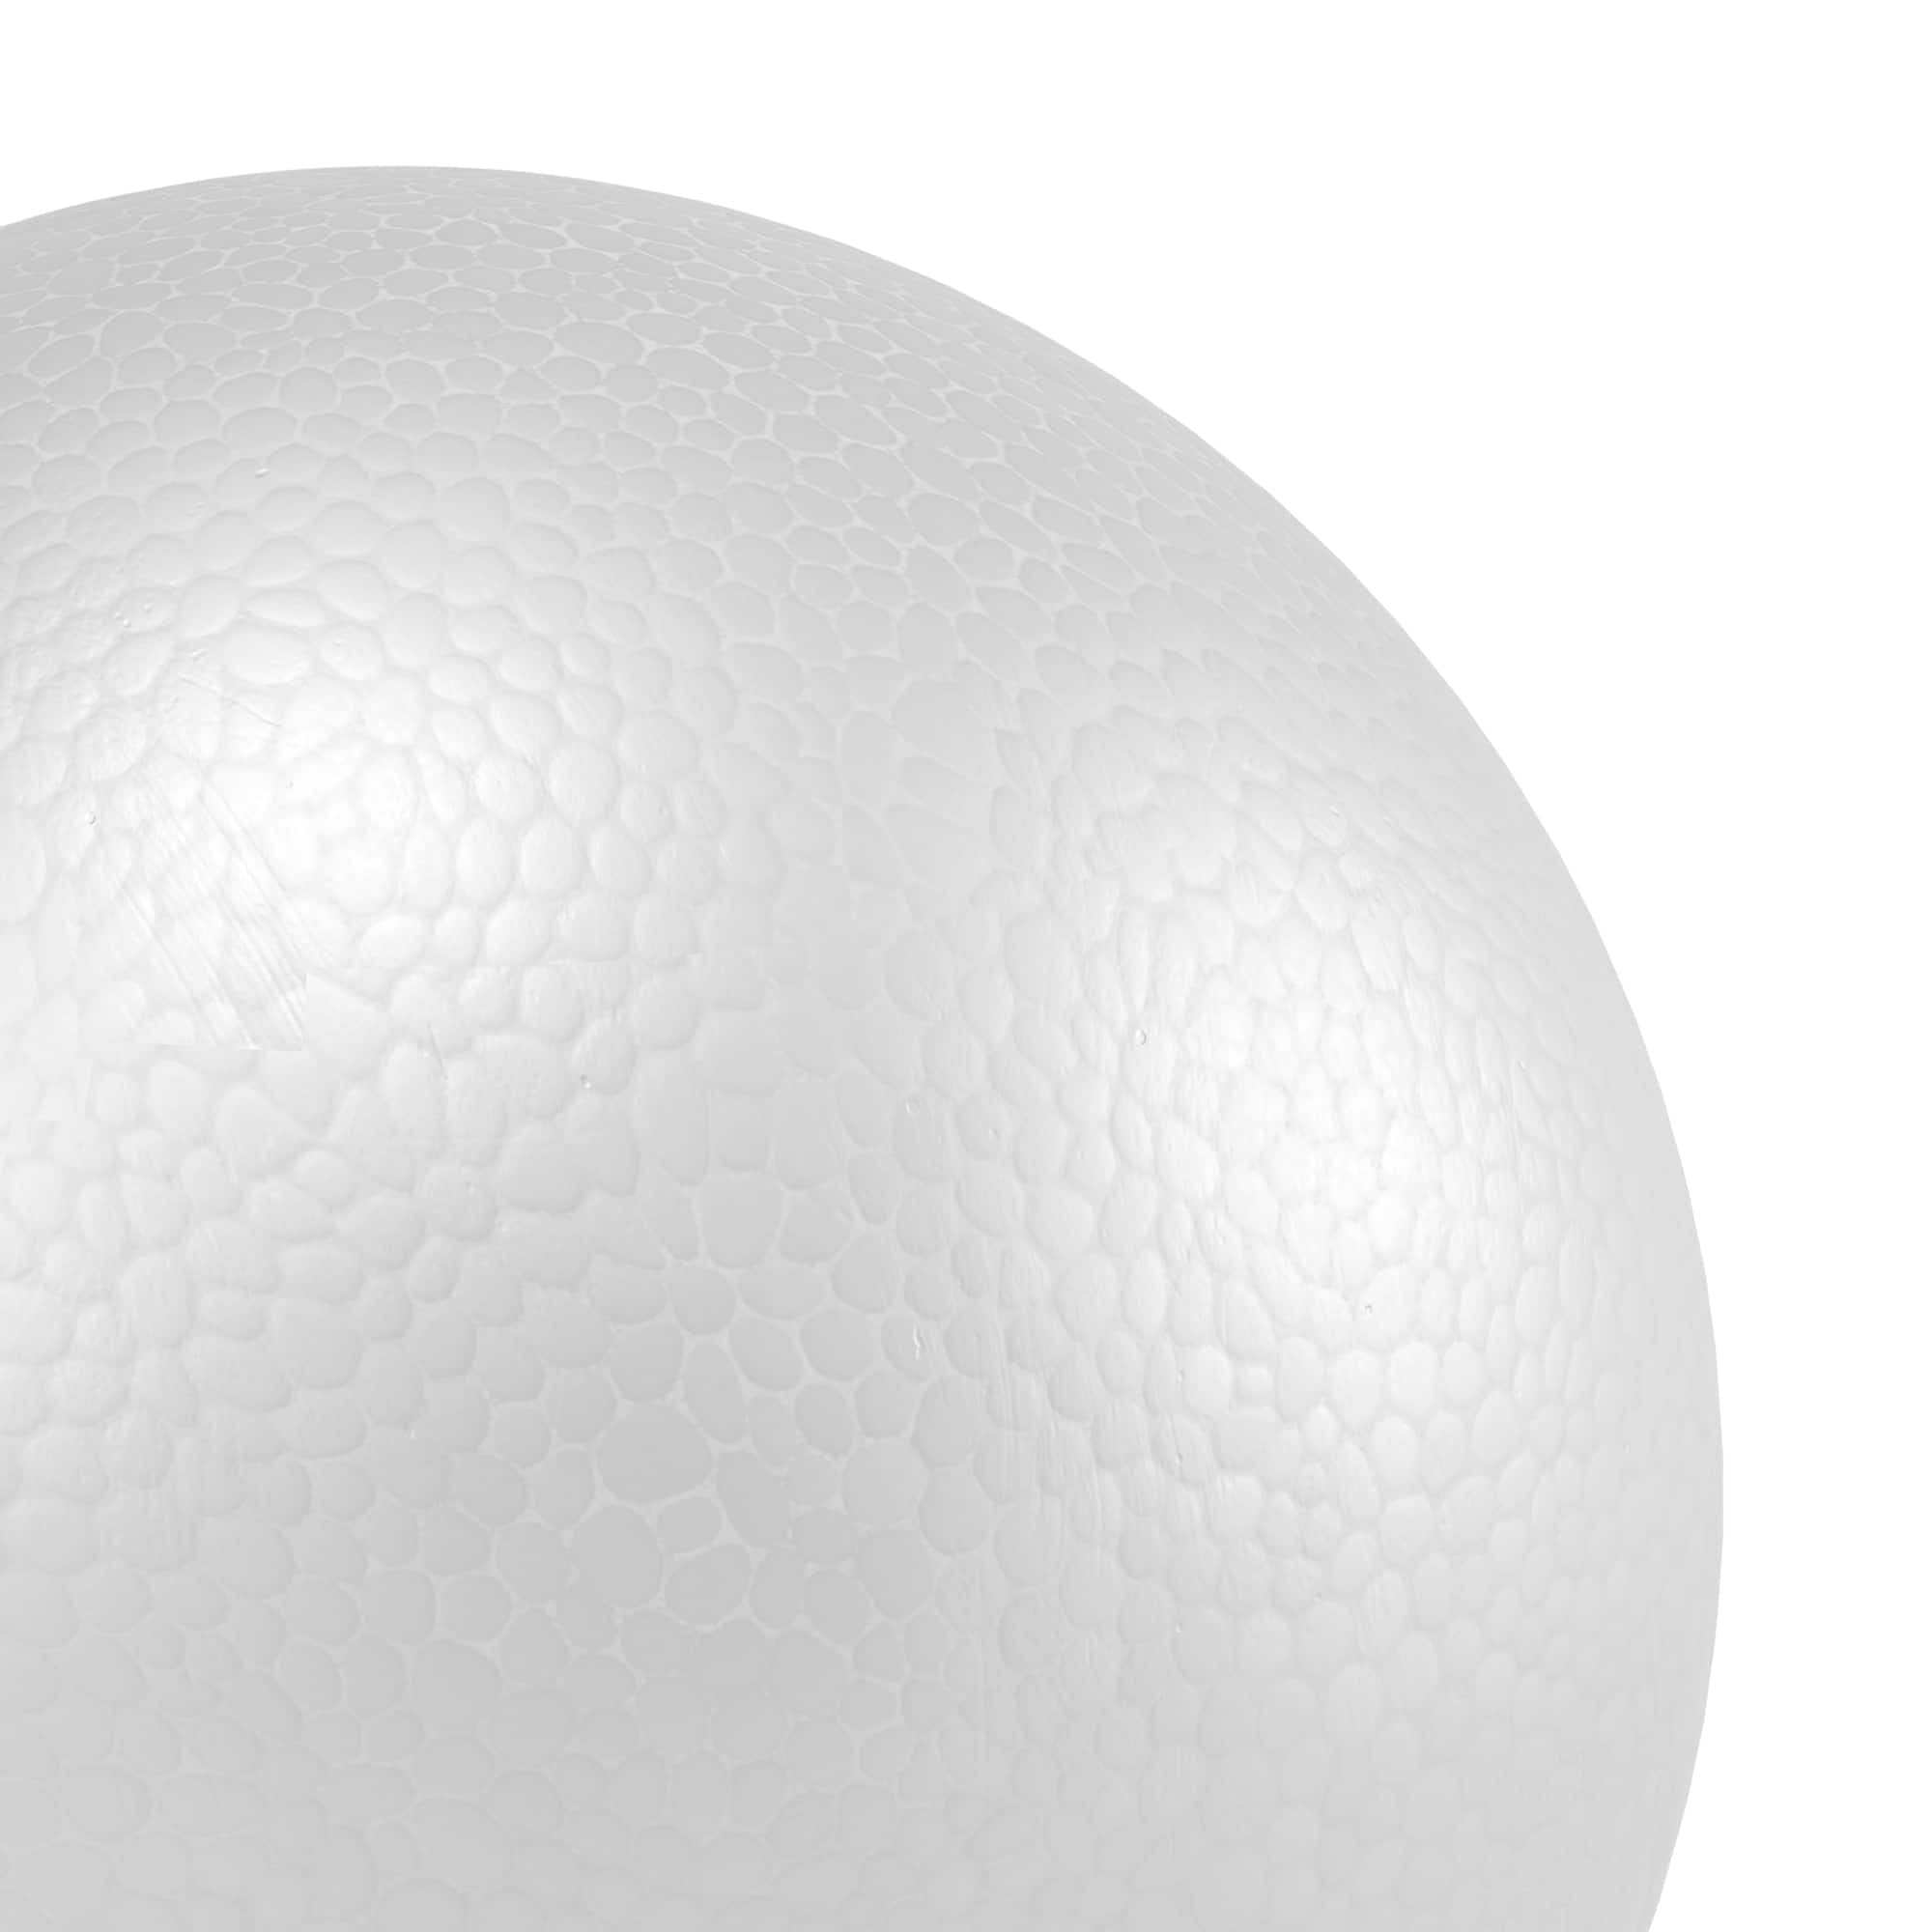 1.8 White Foam Balls, 12ct. by Ashland®